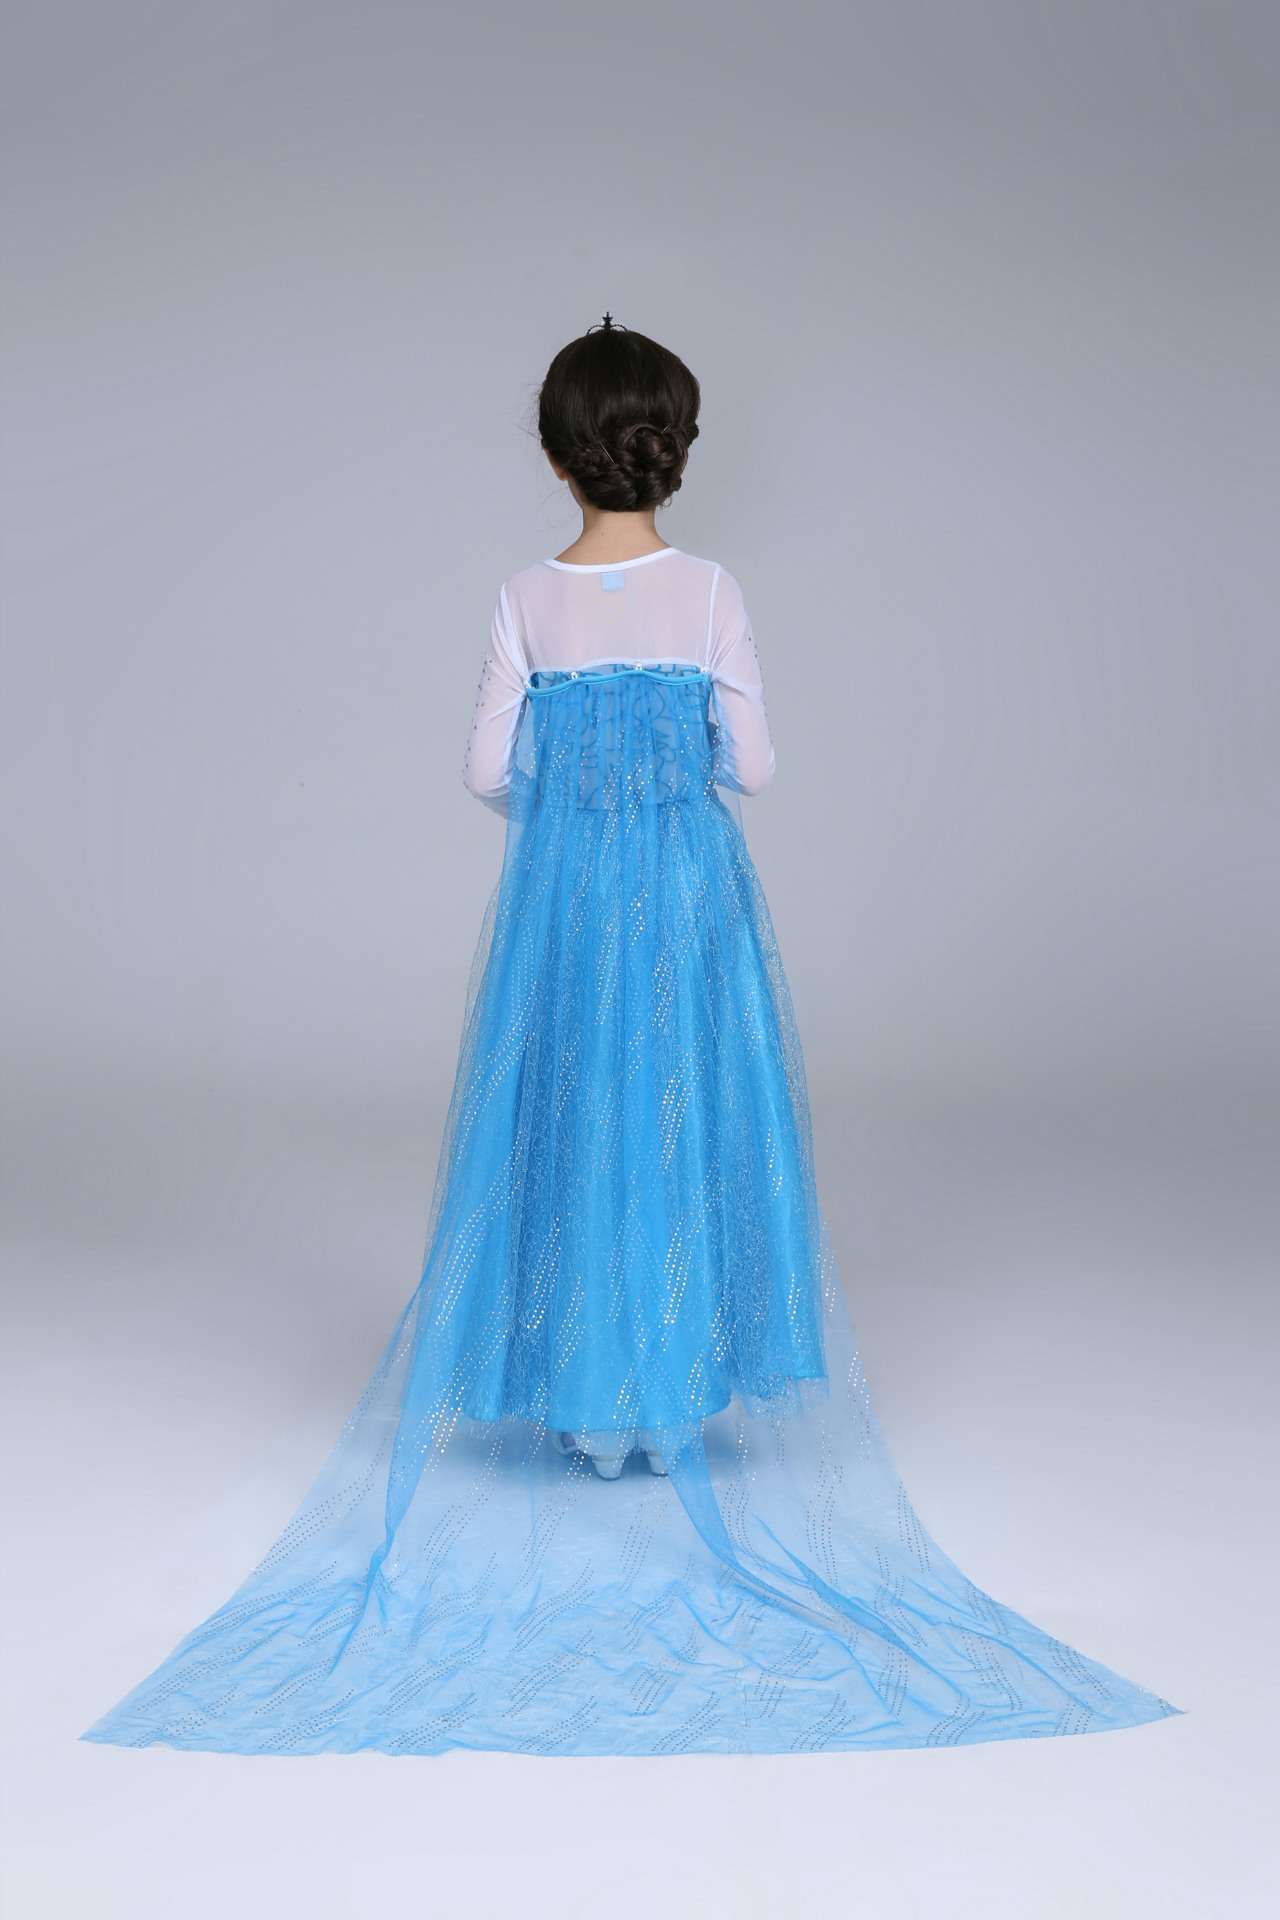 Girls Frozen Queen Elsa Princess Dress Costume For 3-8 Years Kids